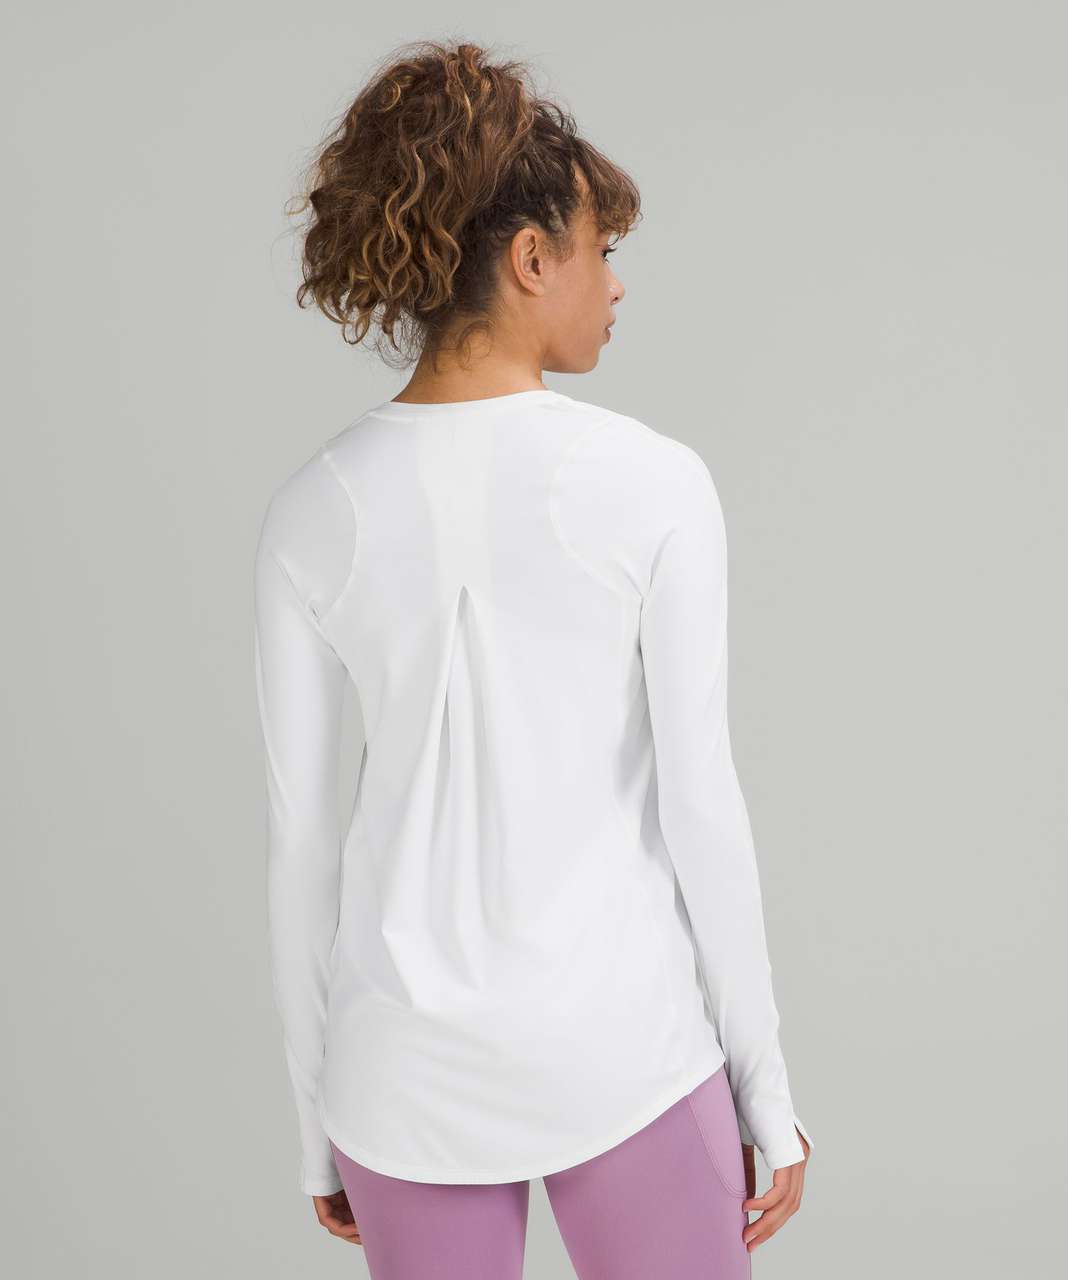 Lululemon Tuck and Flow Long Sleeve Shirt - White